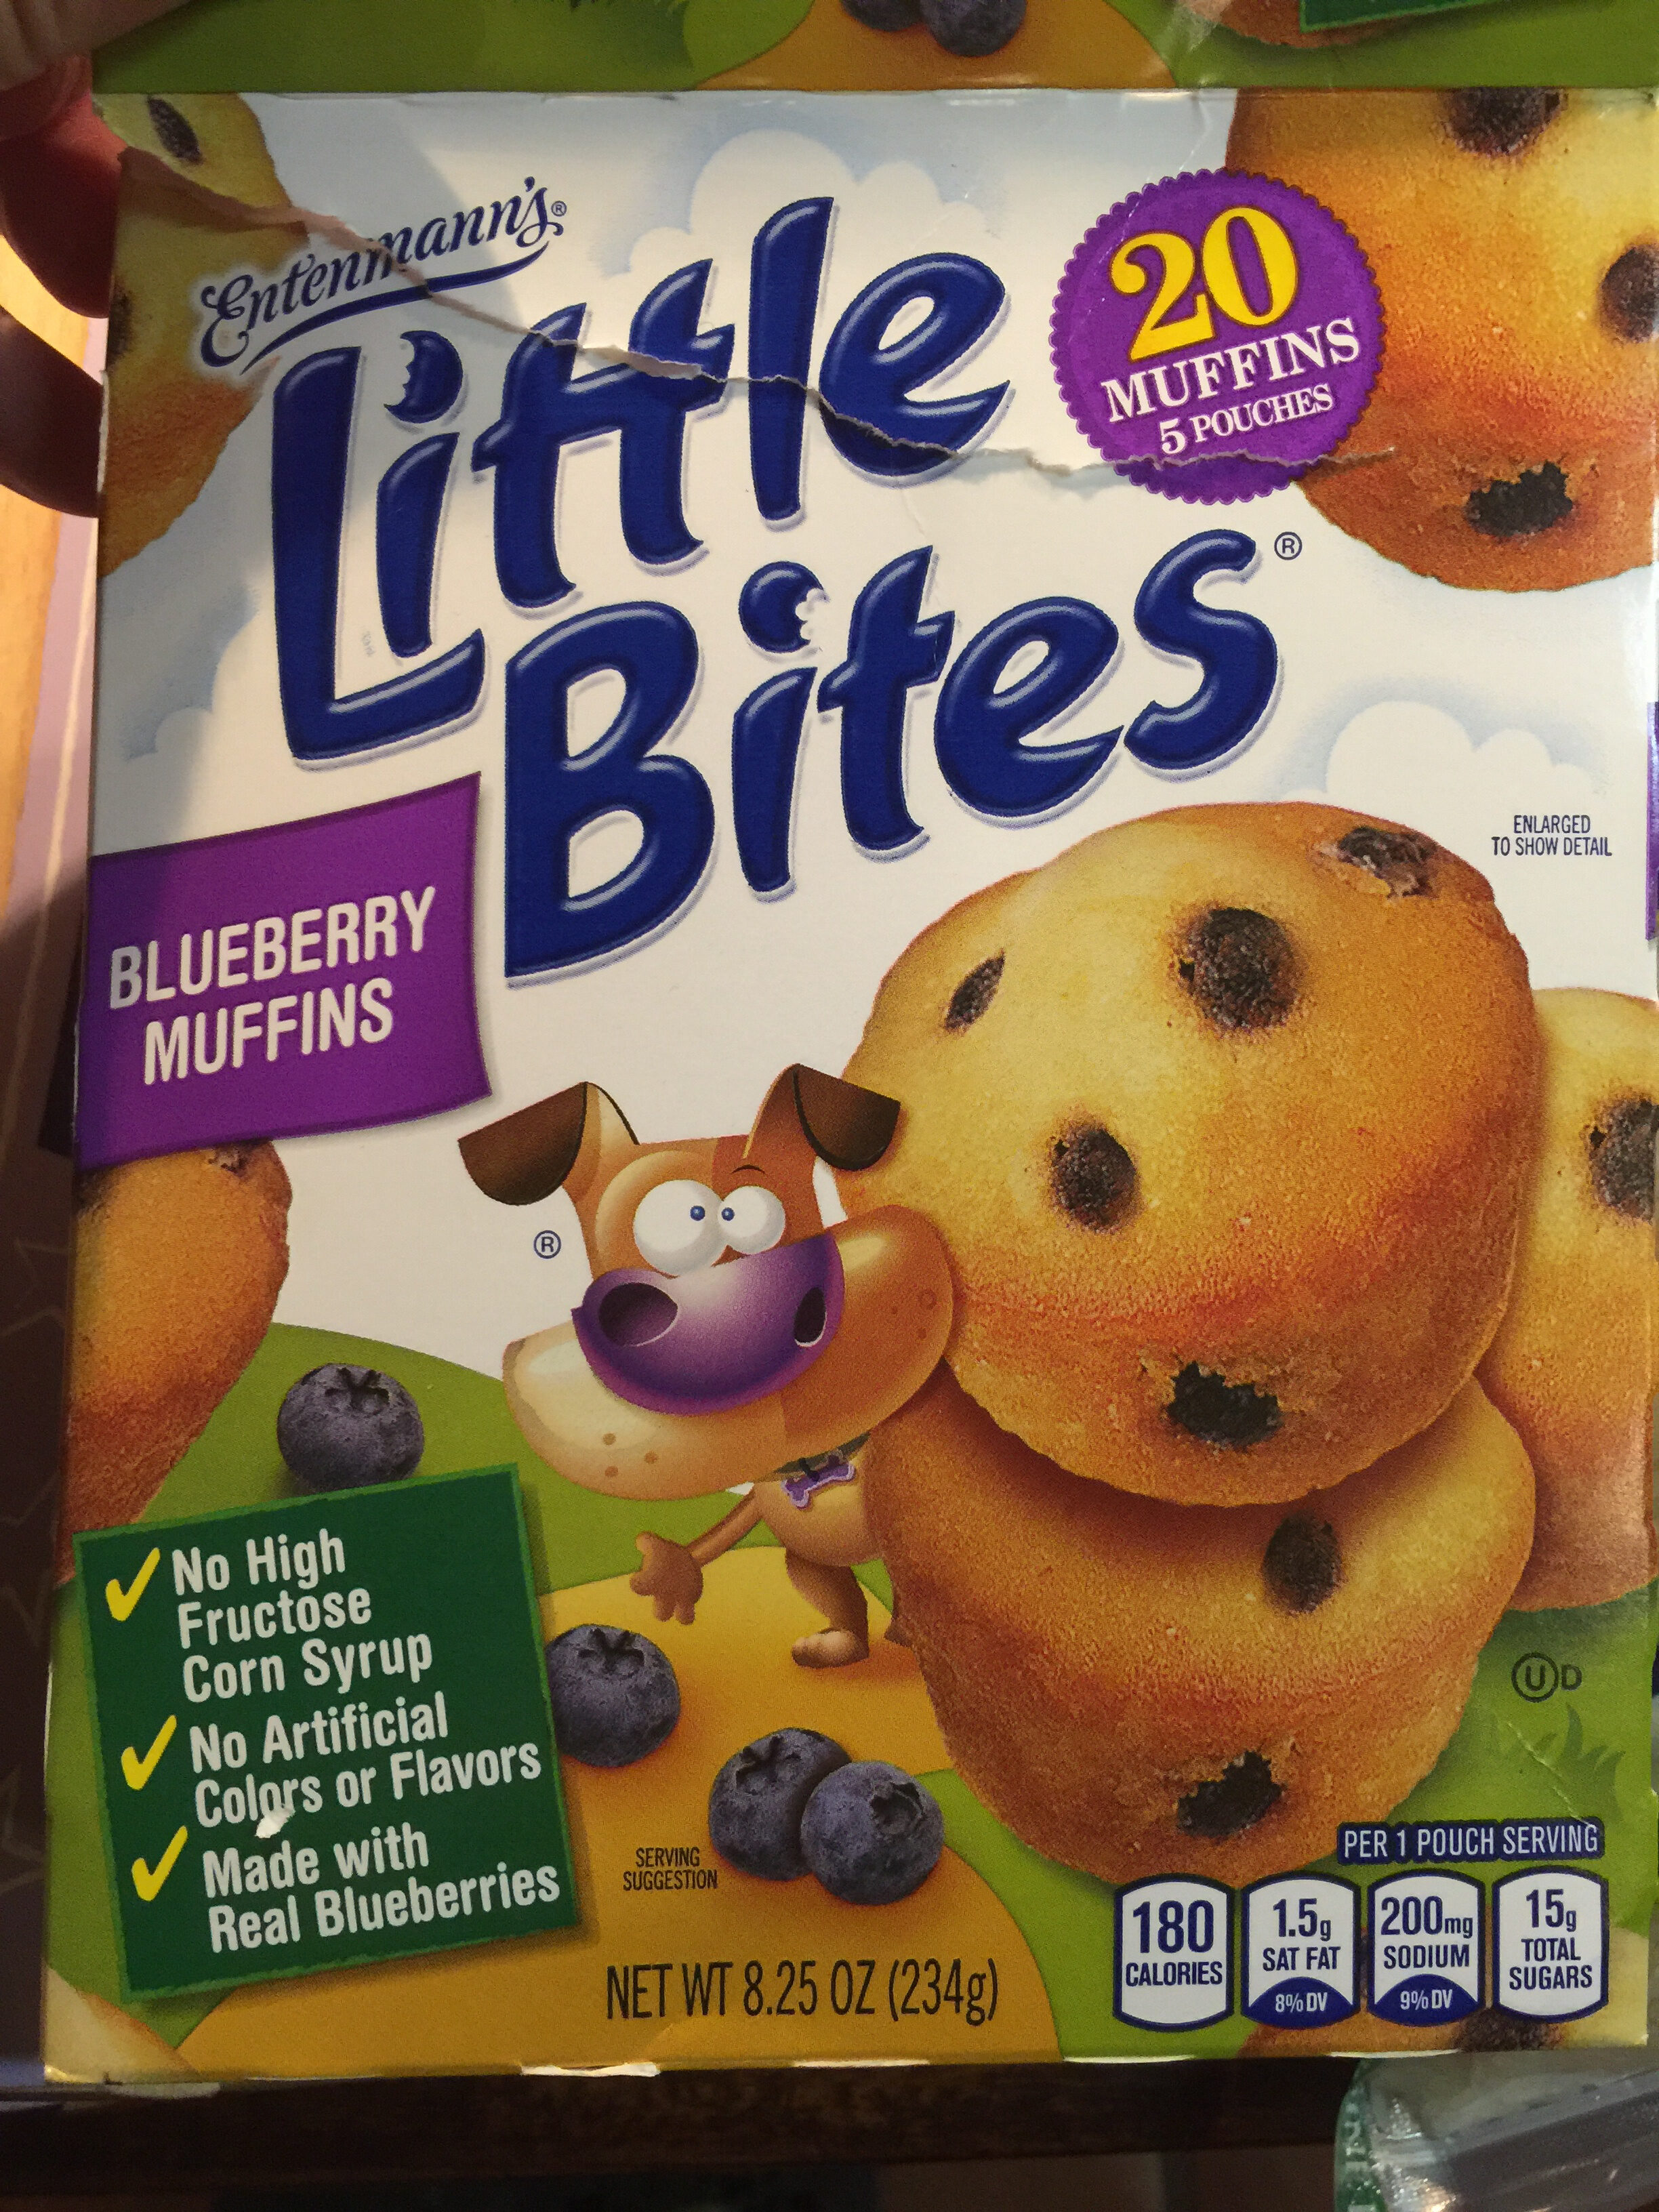 Blueberry muffins, blueberry - Entenmann's